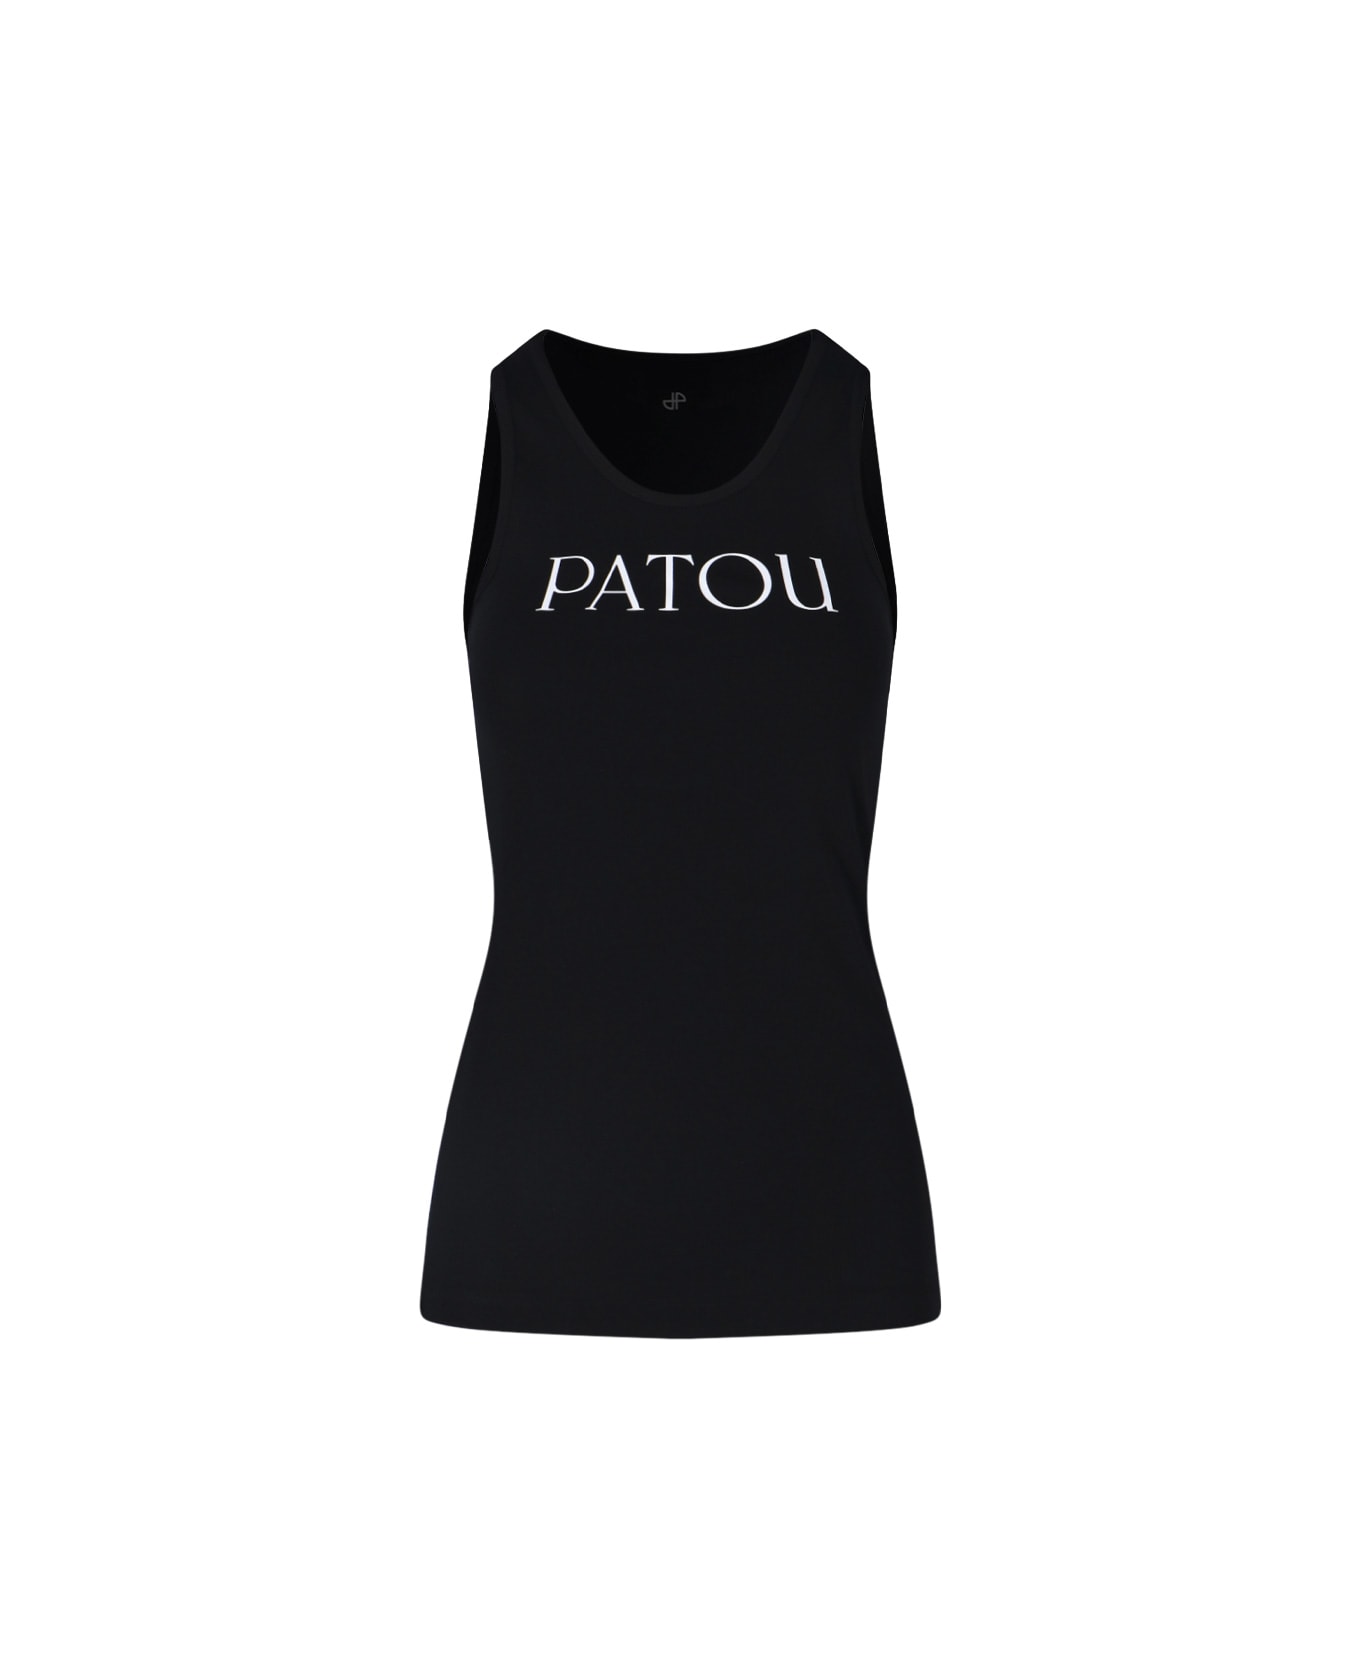 Patou Logo Top - Black   タンクトップ